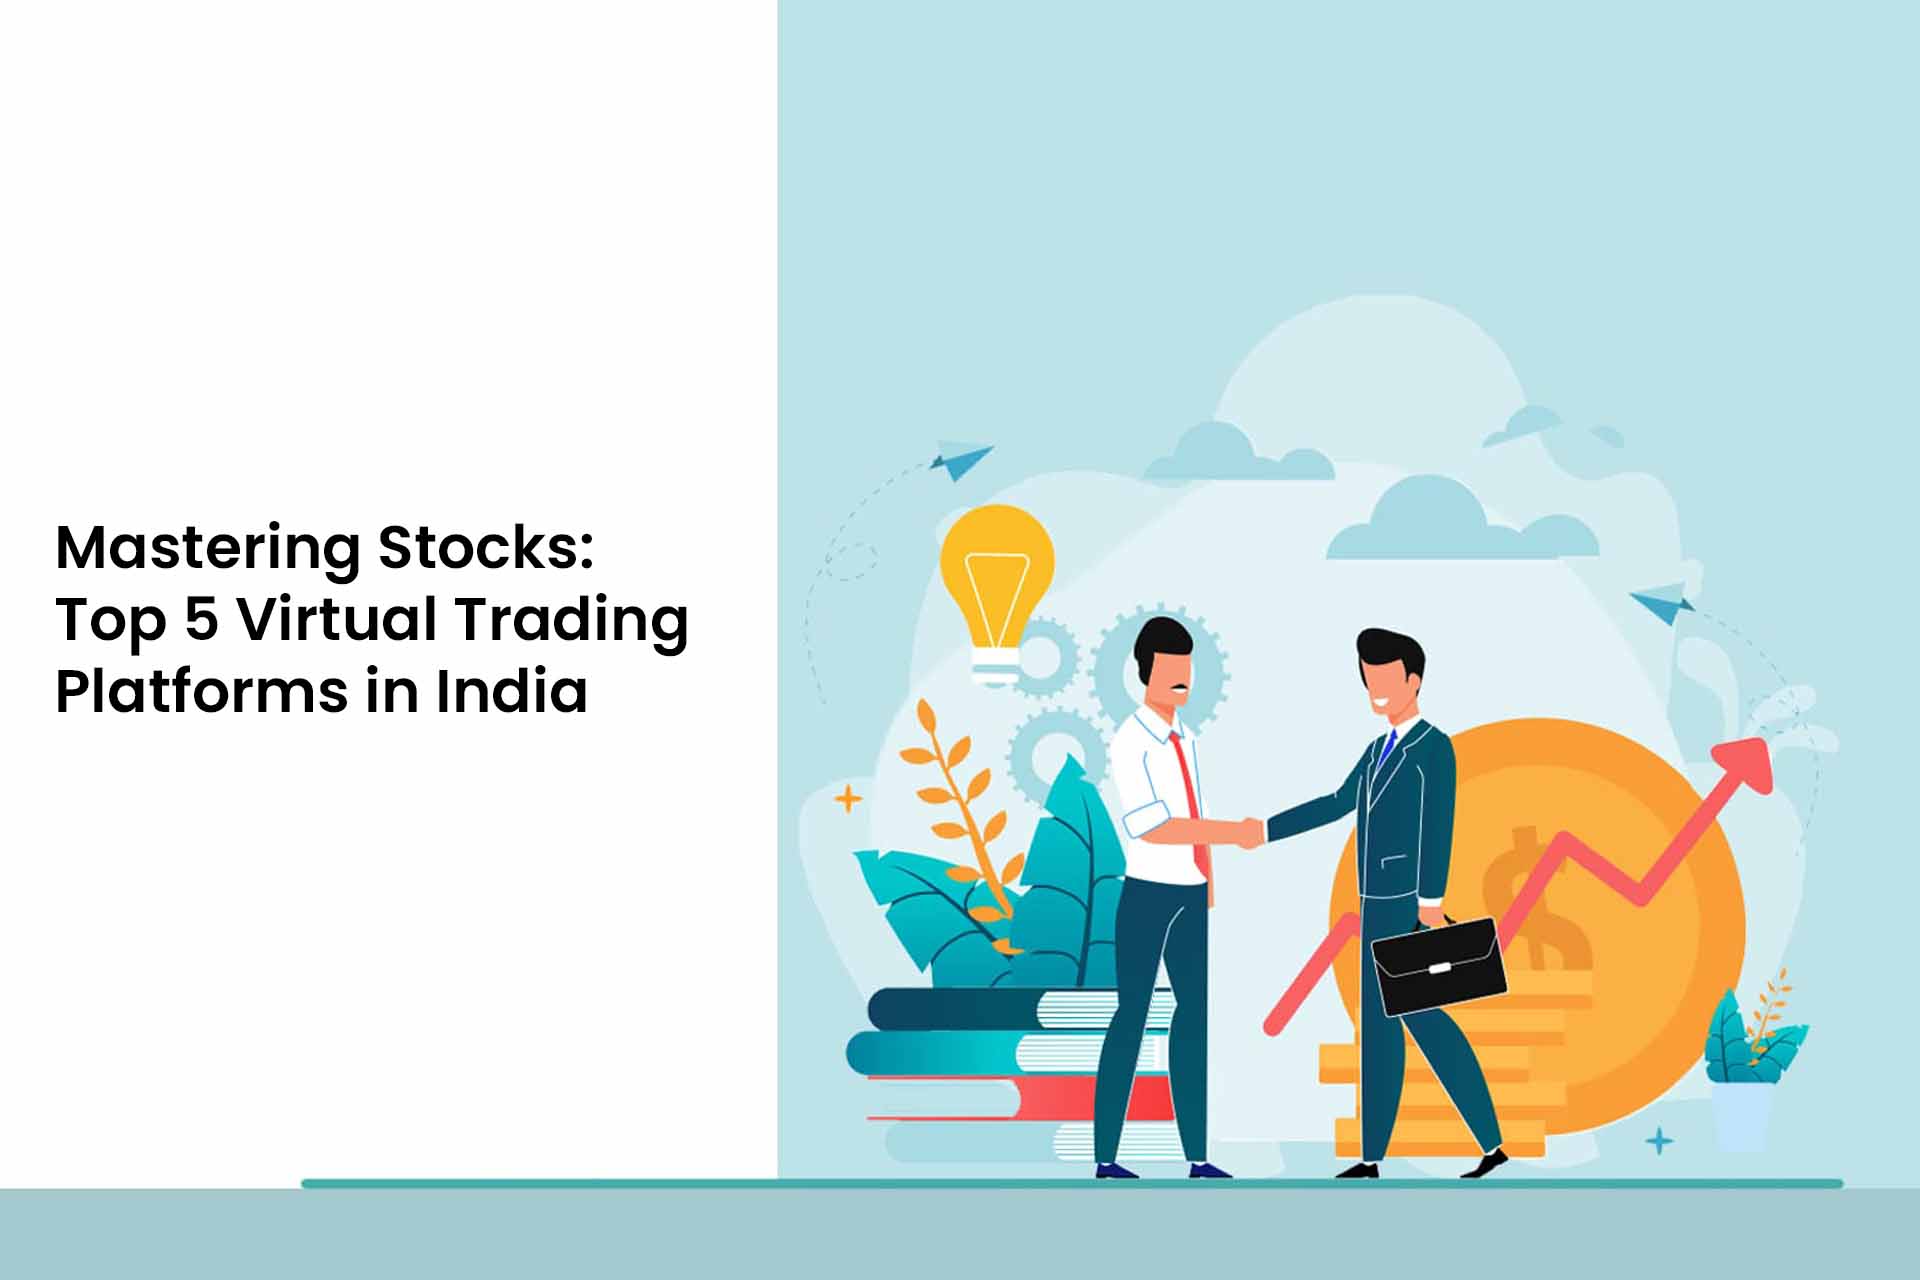 Mastering Stocks: Top 5 Virtual Trading Platforms in India